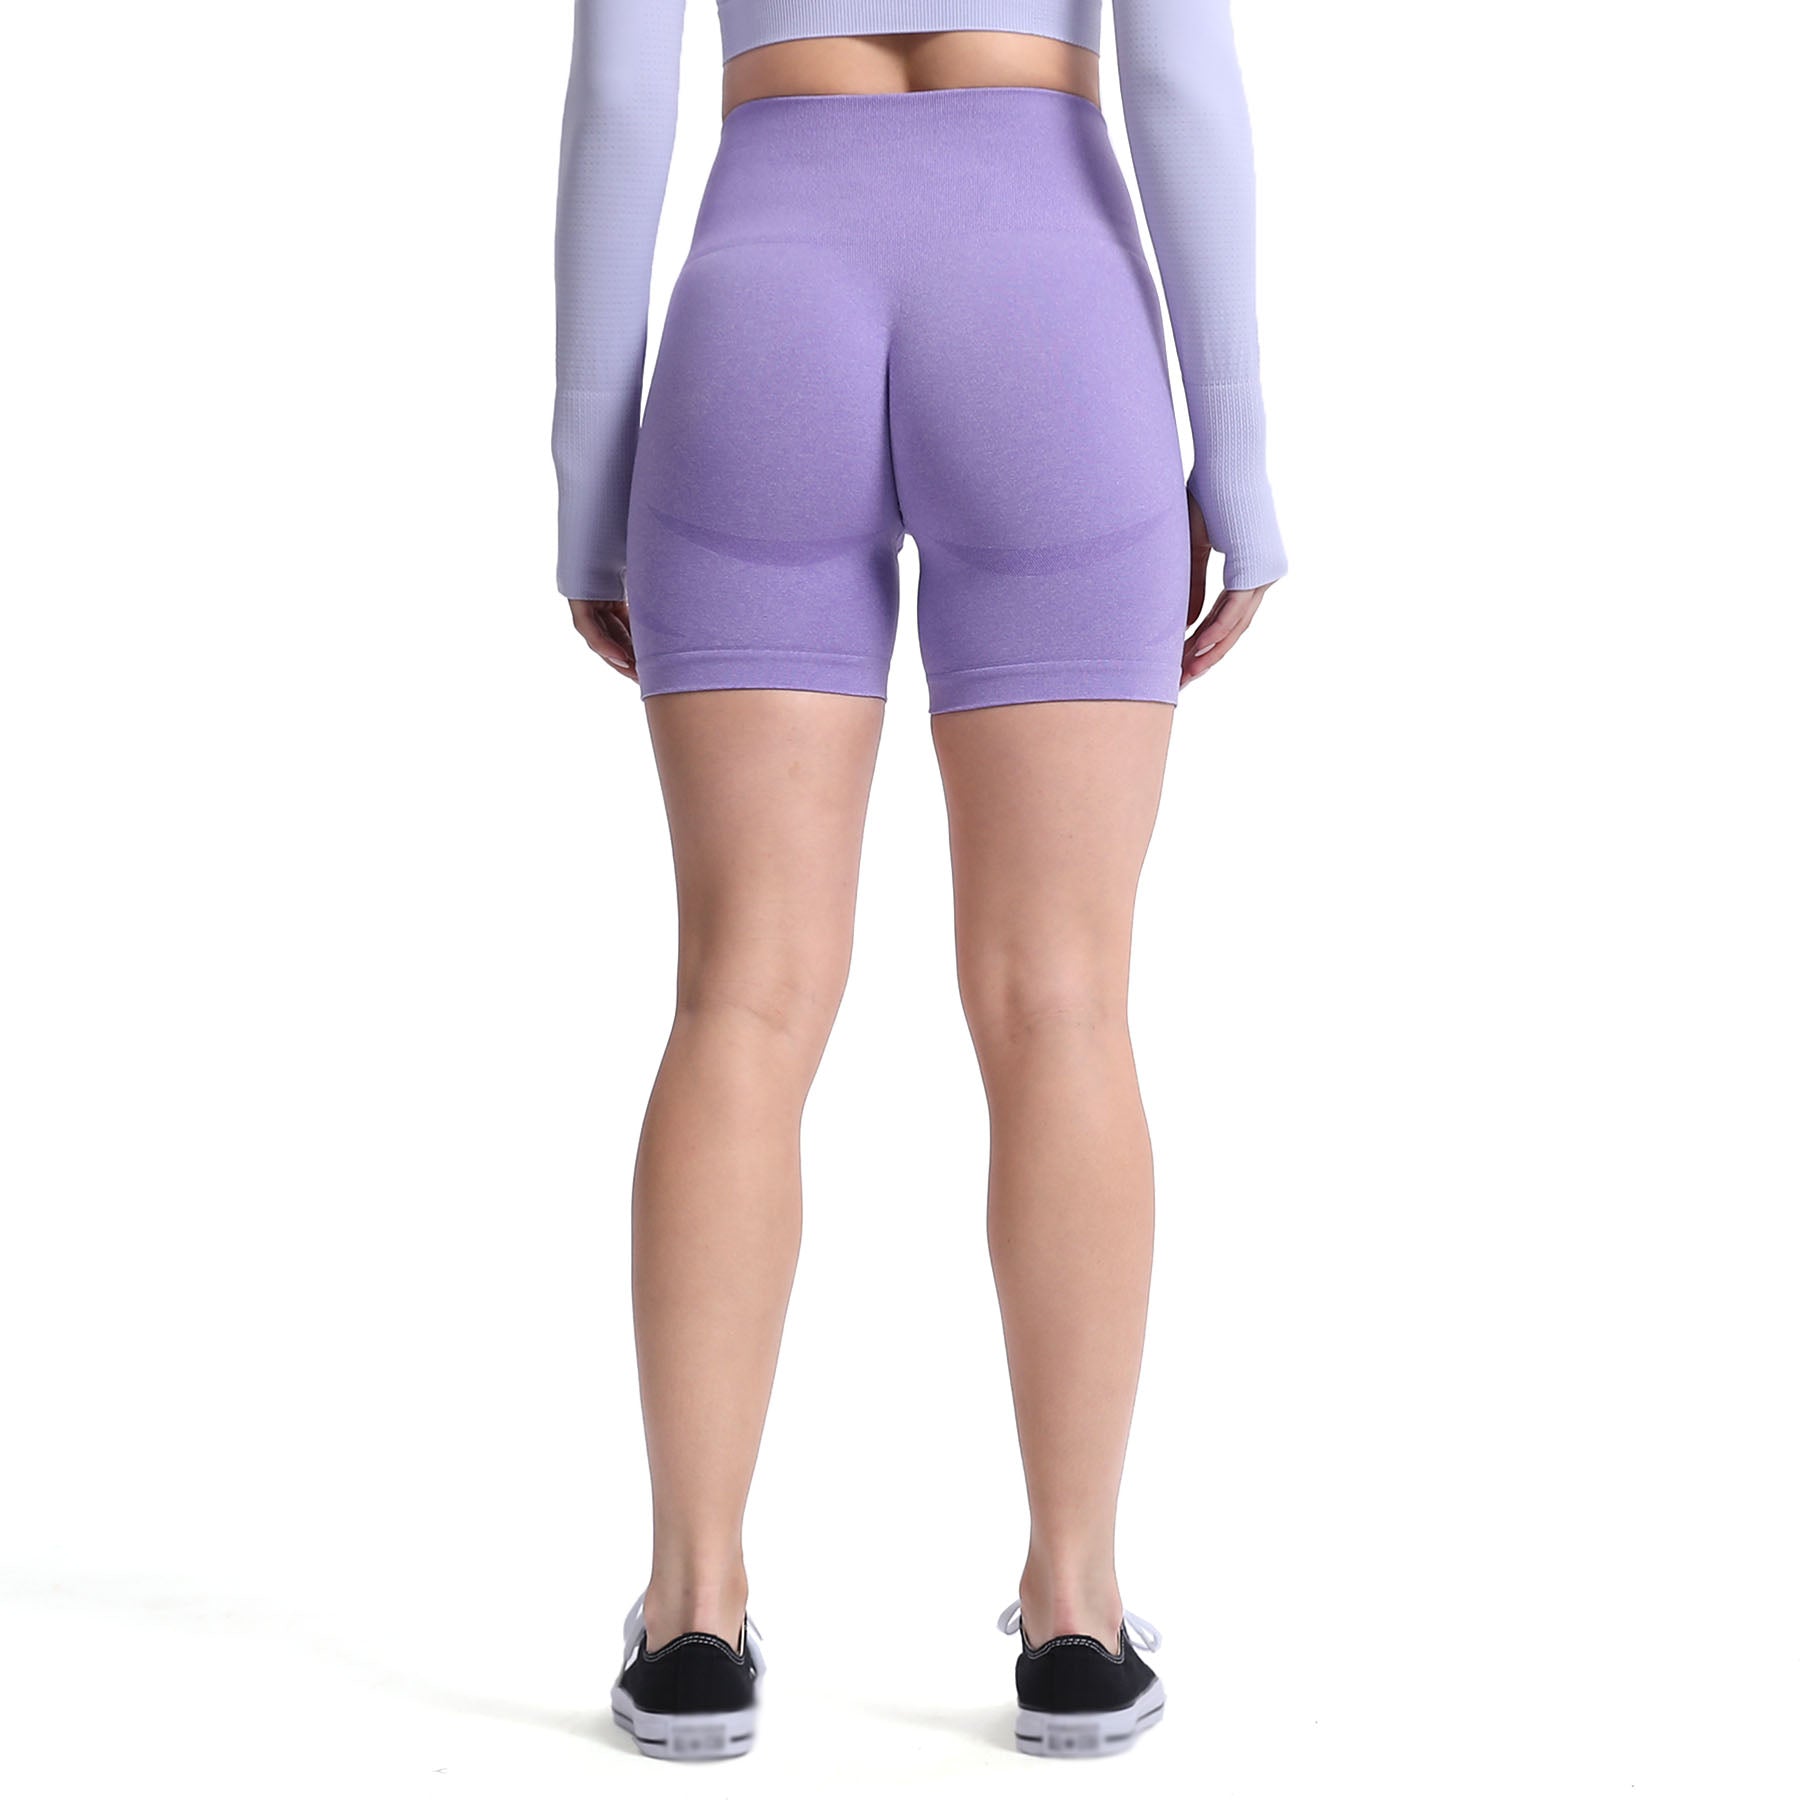 WINX - Ergonomic Ultra Shorts